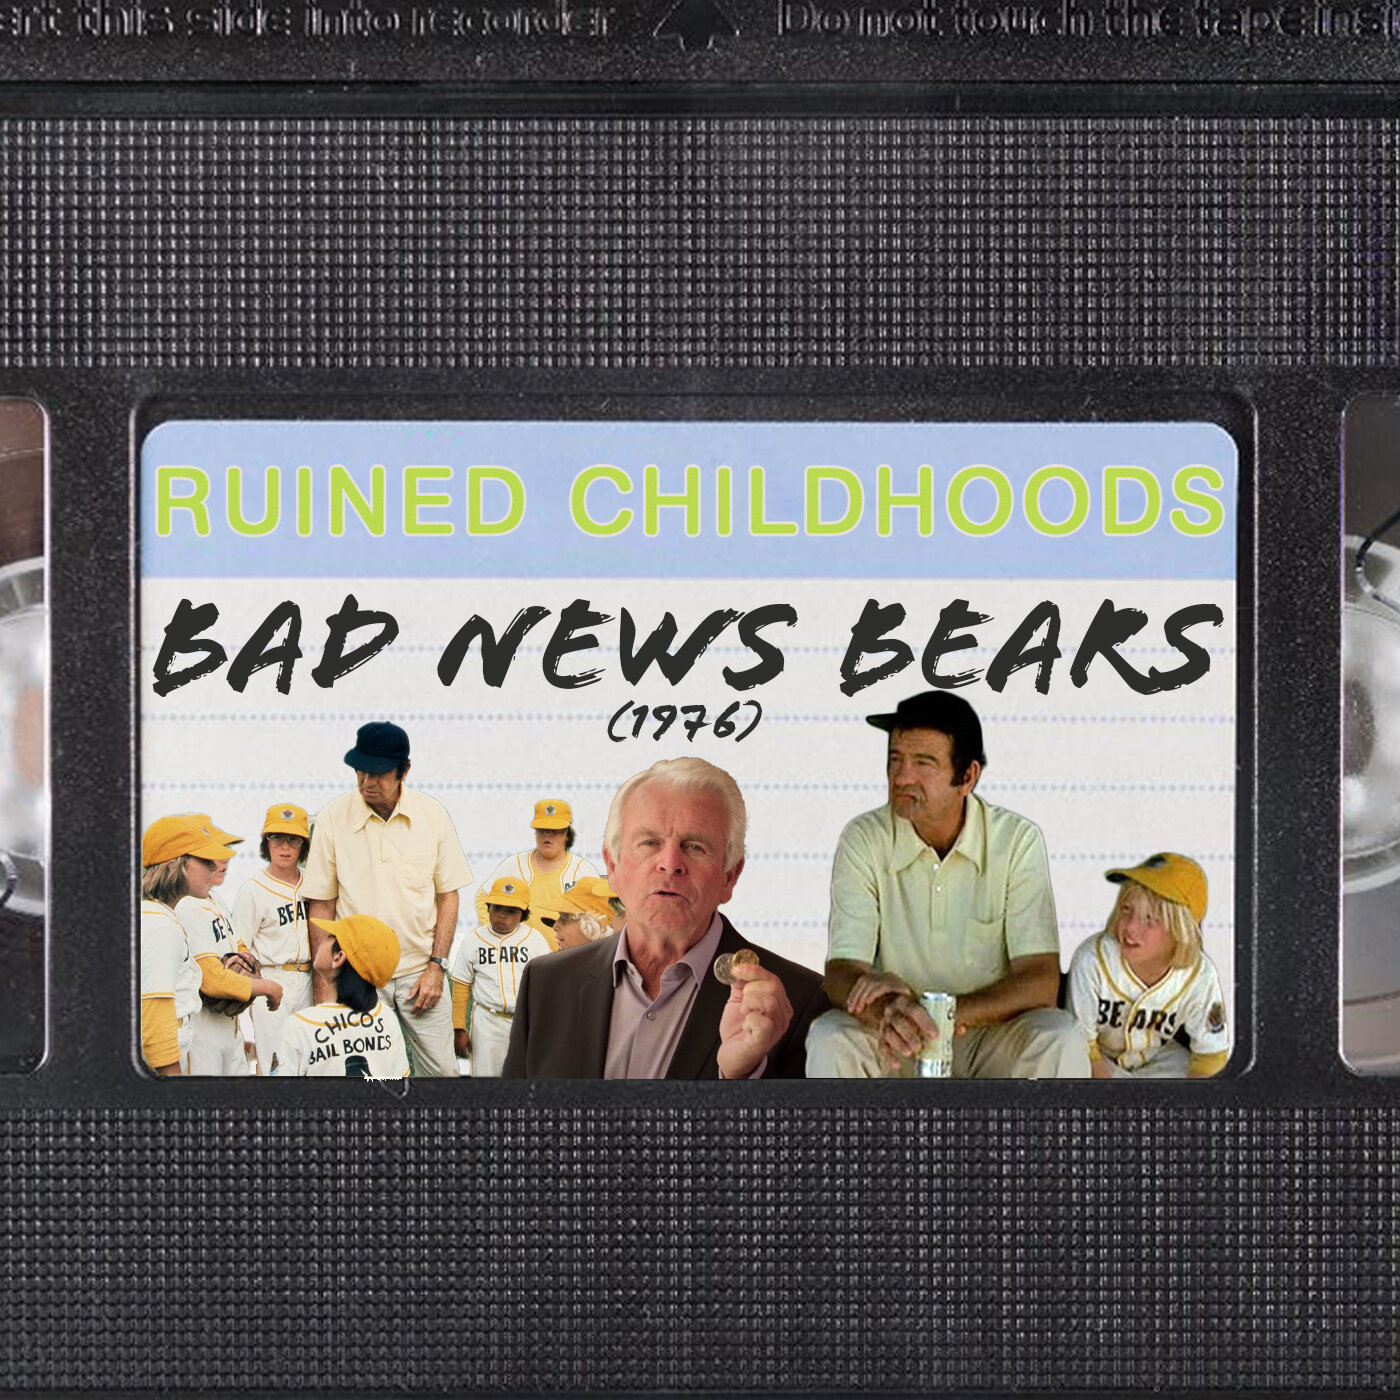 The Bad News Bears (1976)